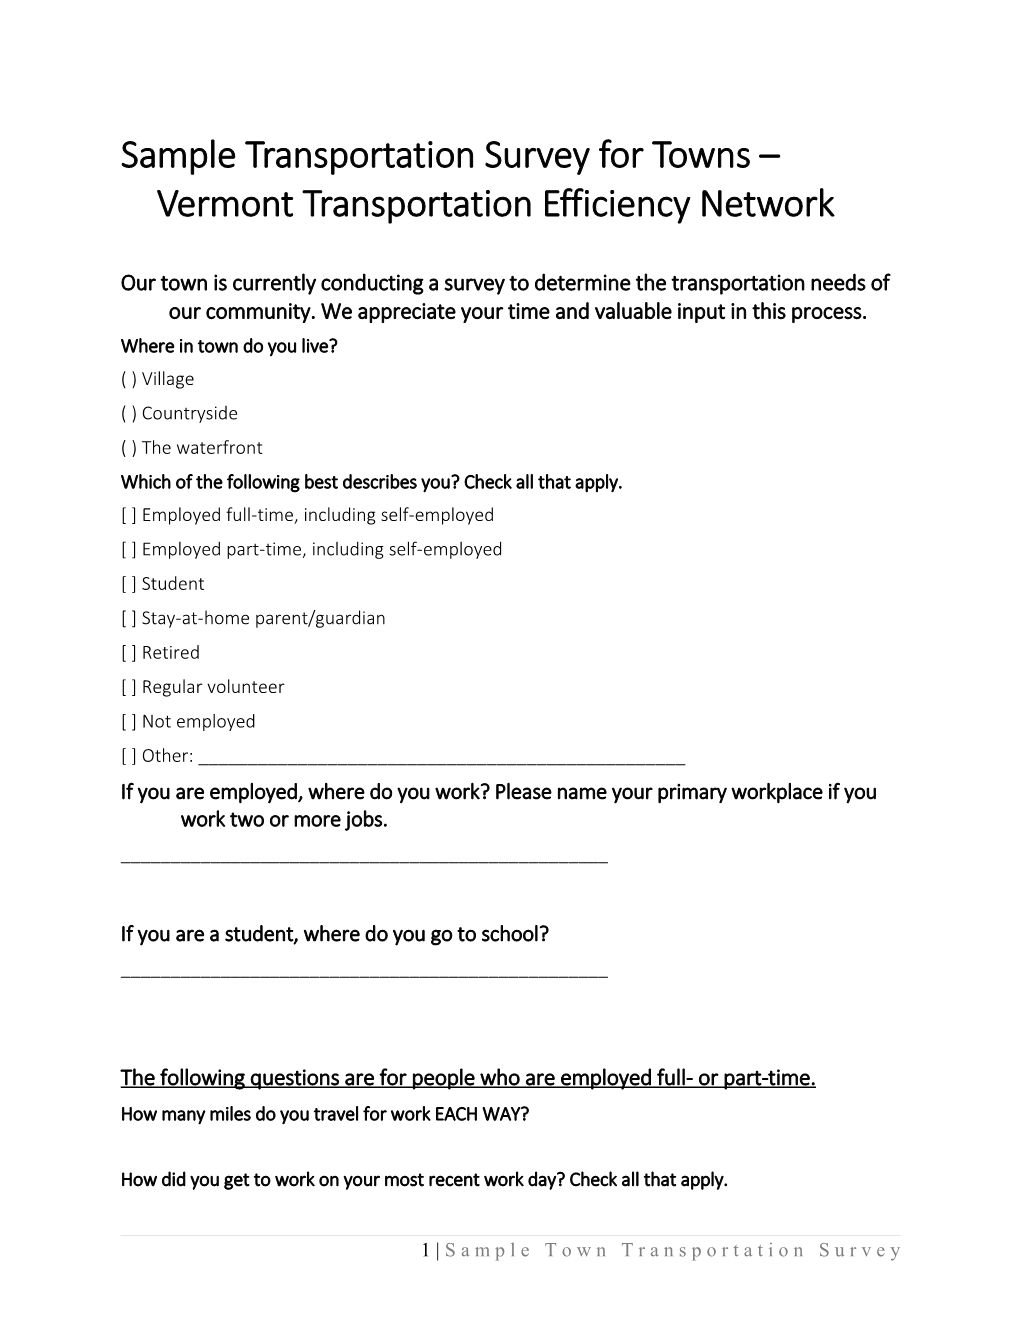 Sample Transportation Survey for Towns Vermont Transportation Efficiency Network